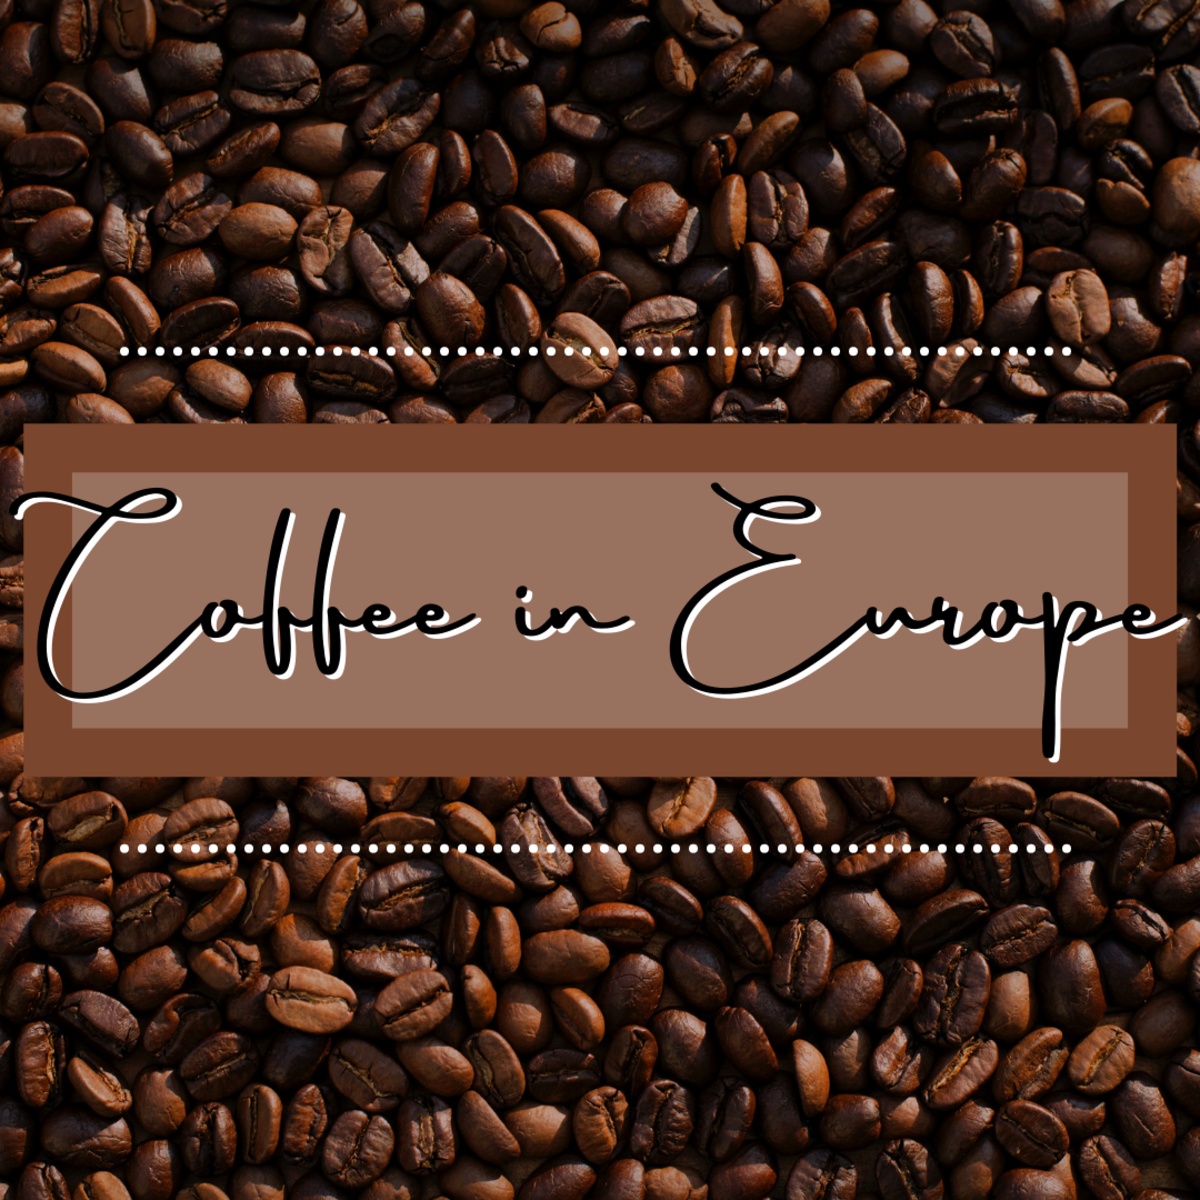 Coffee in Europe: Birth of the Modern Coffeehouse